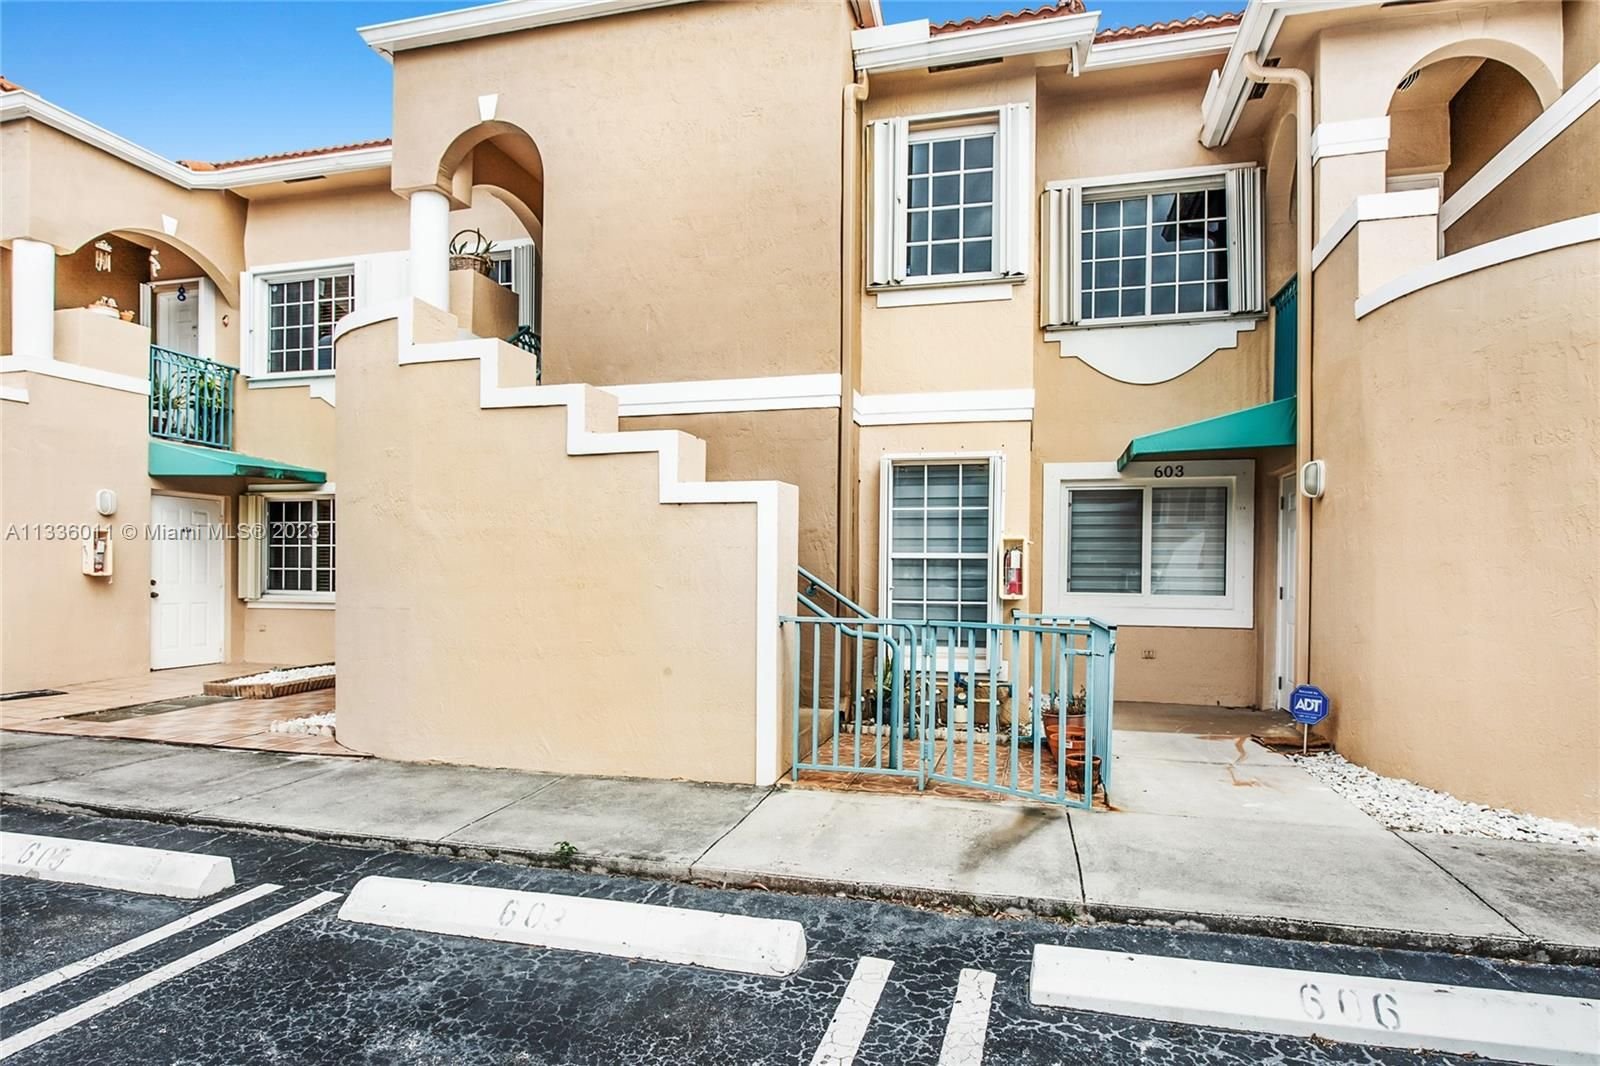 Real estate property located at 6445 130th Pl #606, Miami-Dade County, Miami, FL